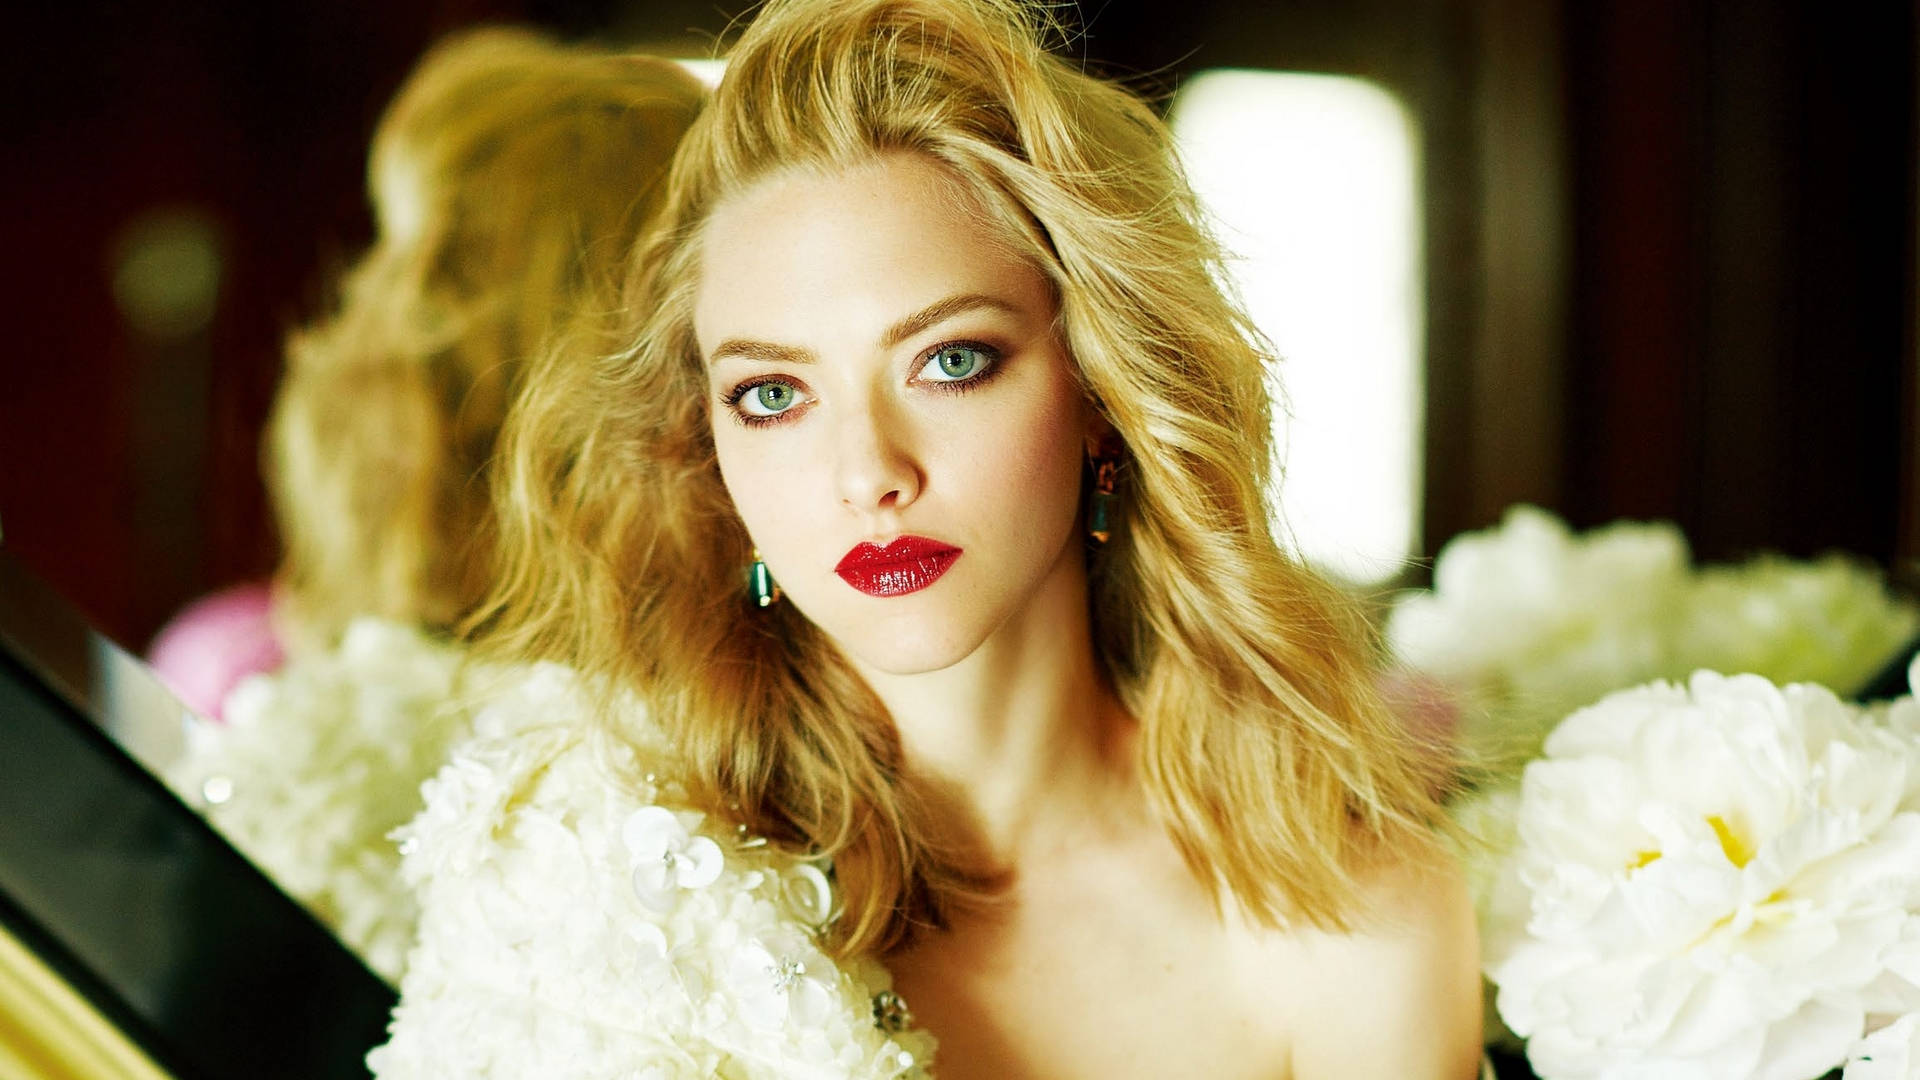 Elegant Blonde Beauty in Red Lipstick Wallpaper